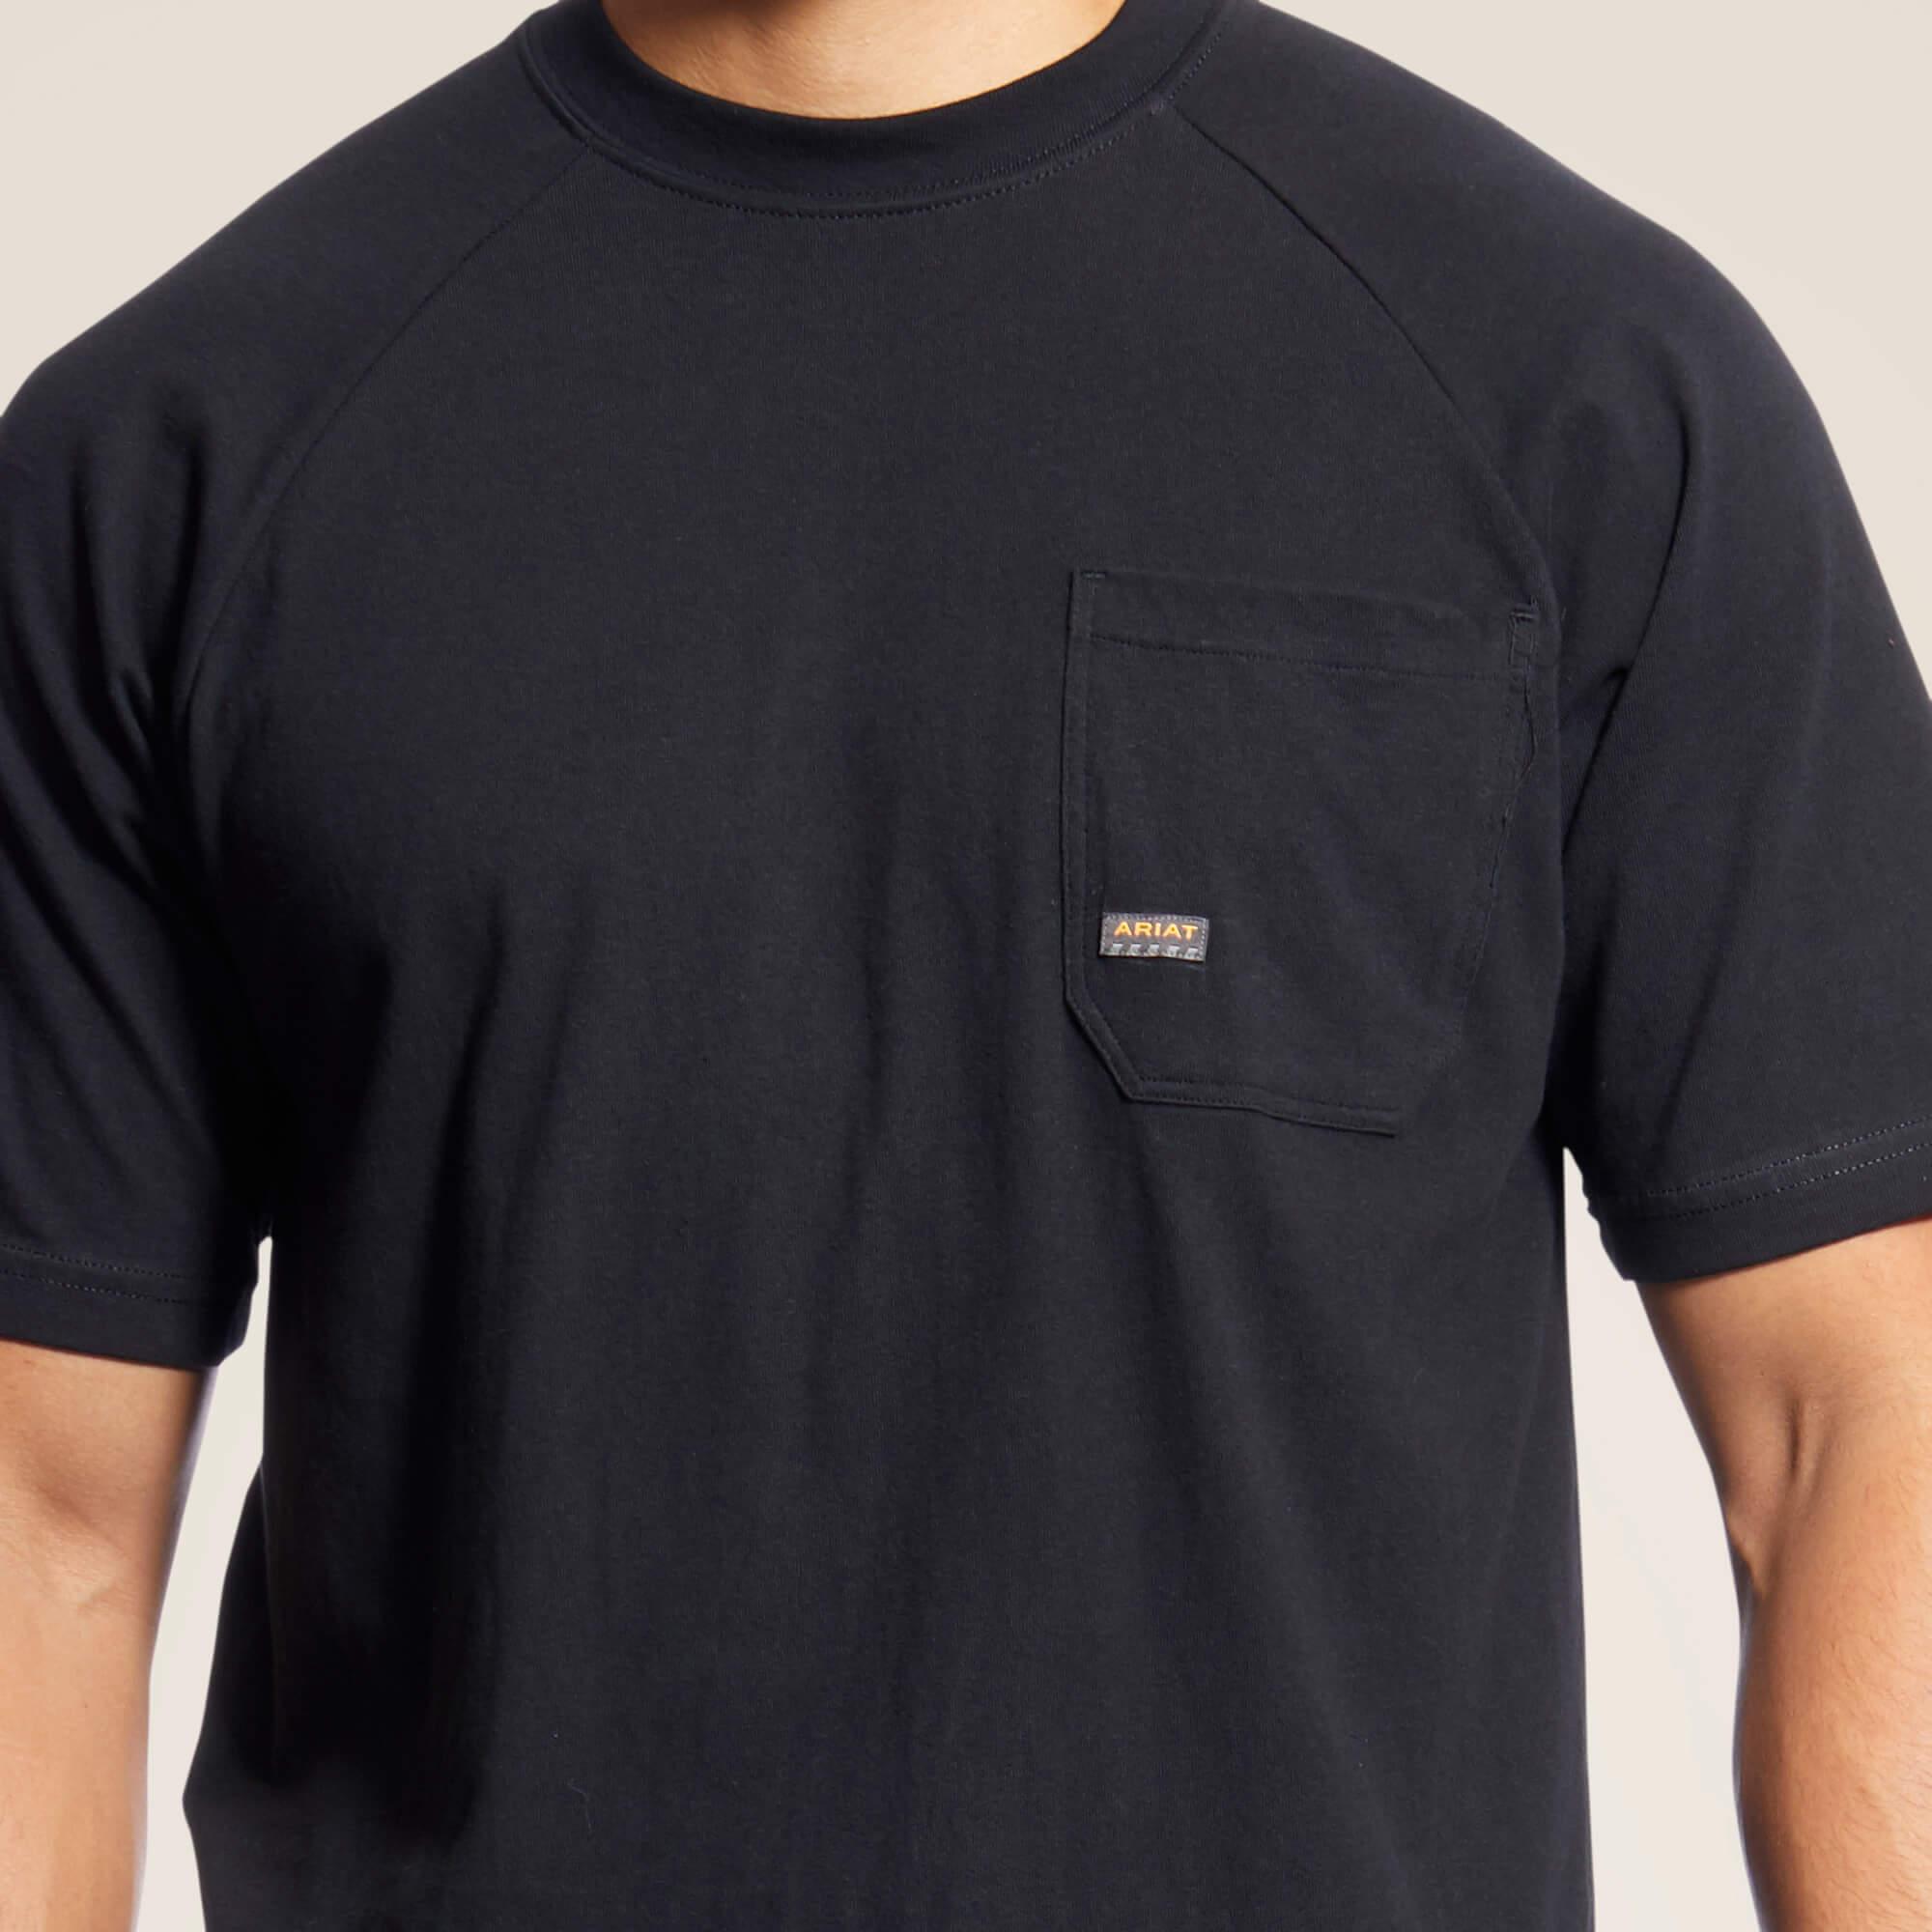 Rebar Cotton Strong T-Shirt - Black